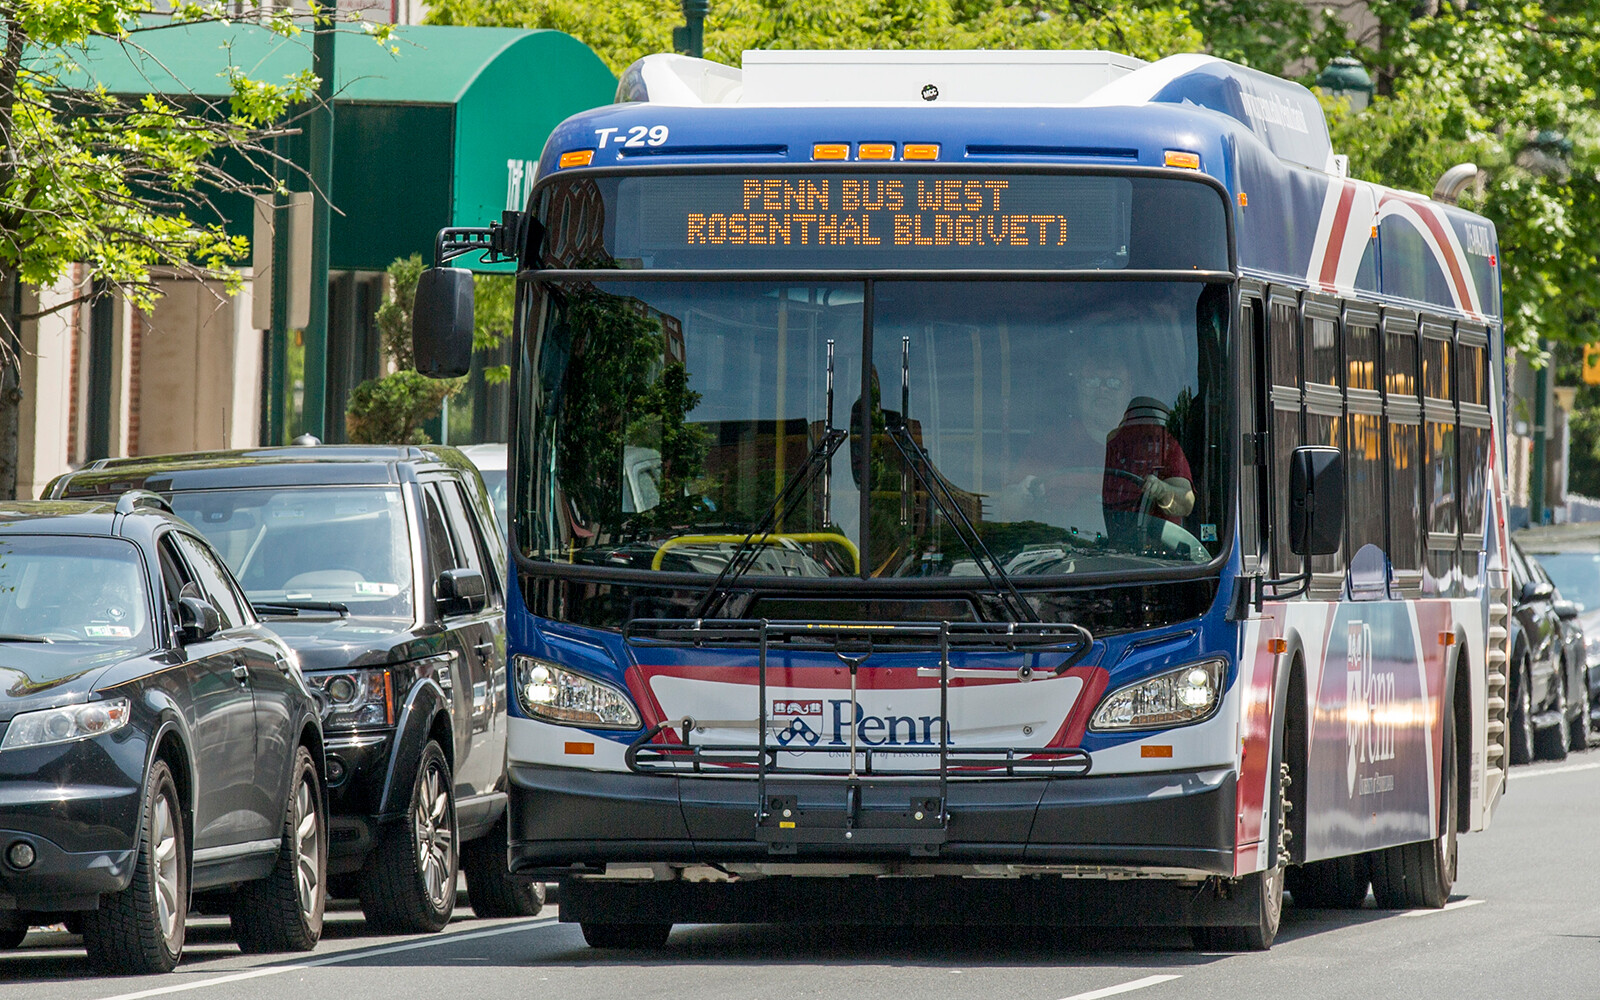 Penn Bus West